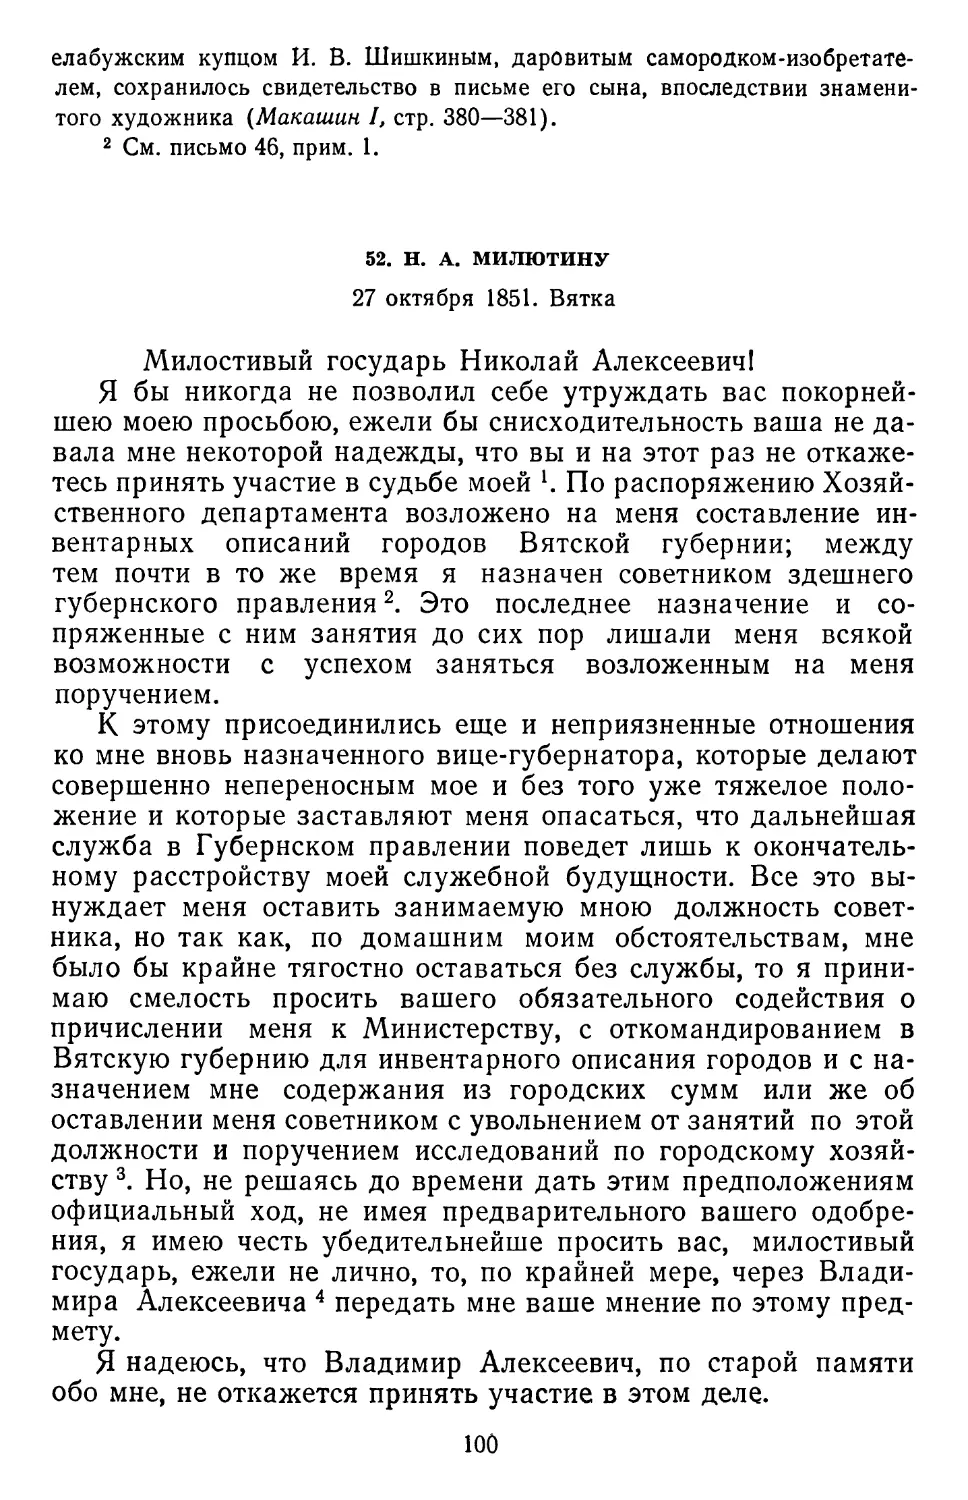 52.Н. А. Милютину. 27 октября 1851.Вятка